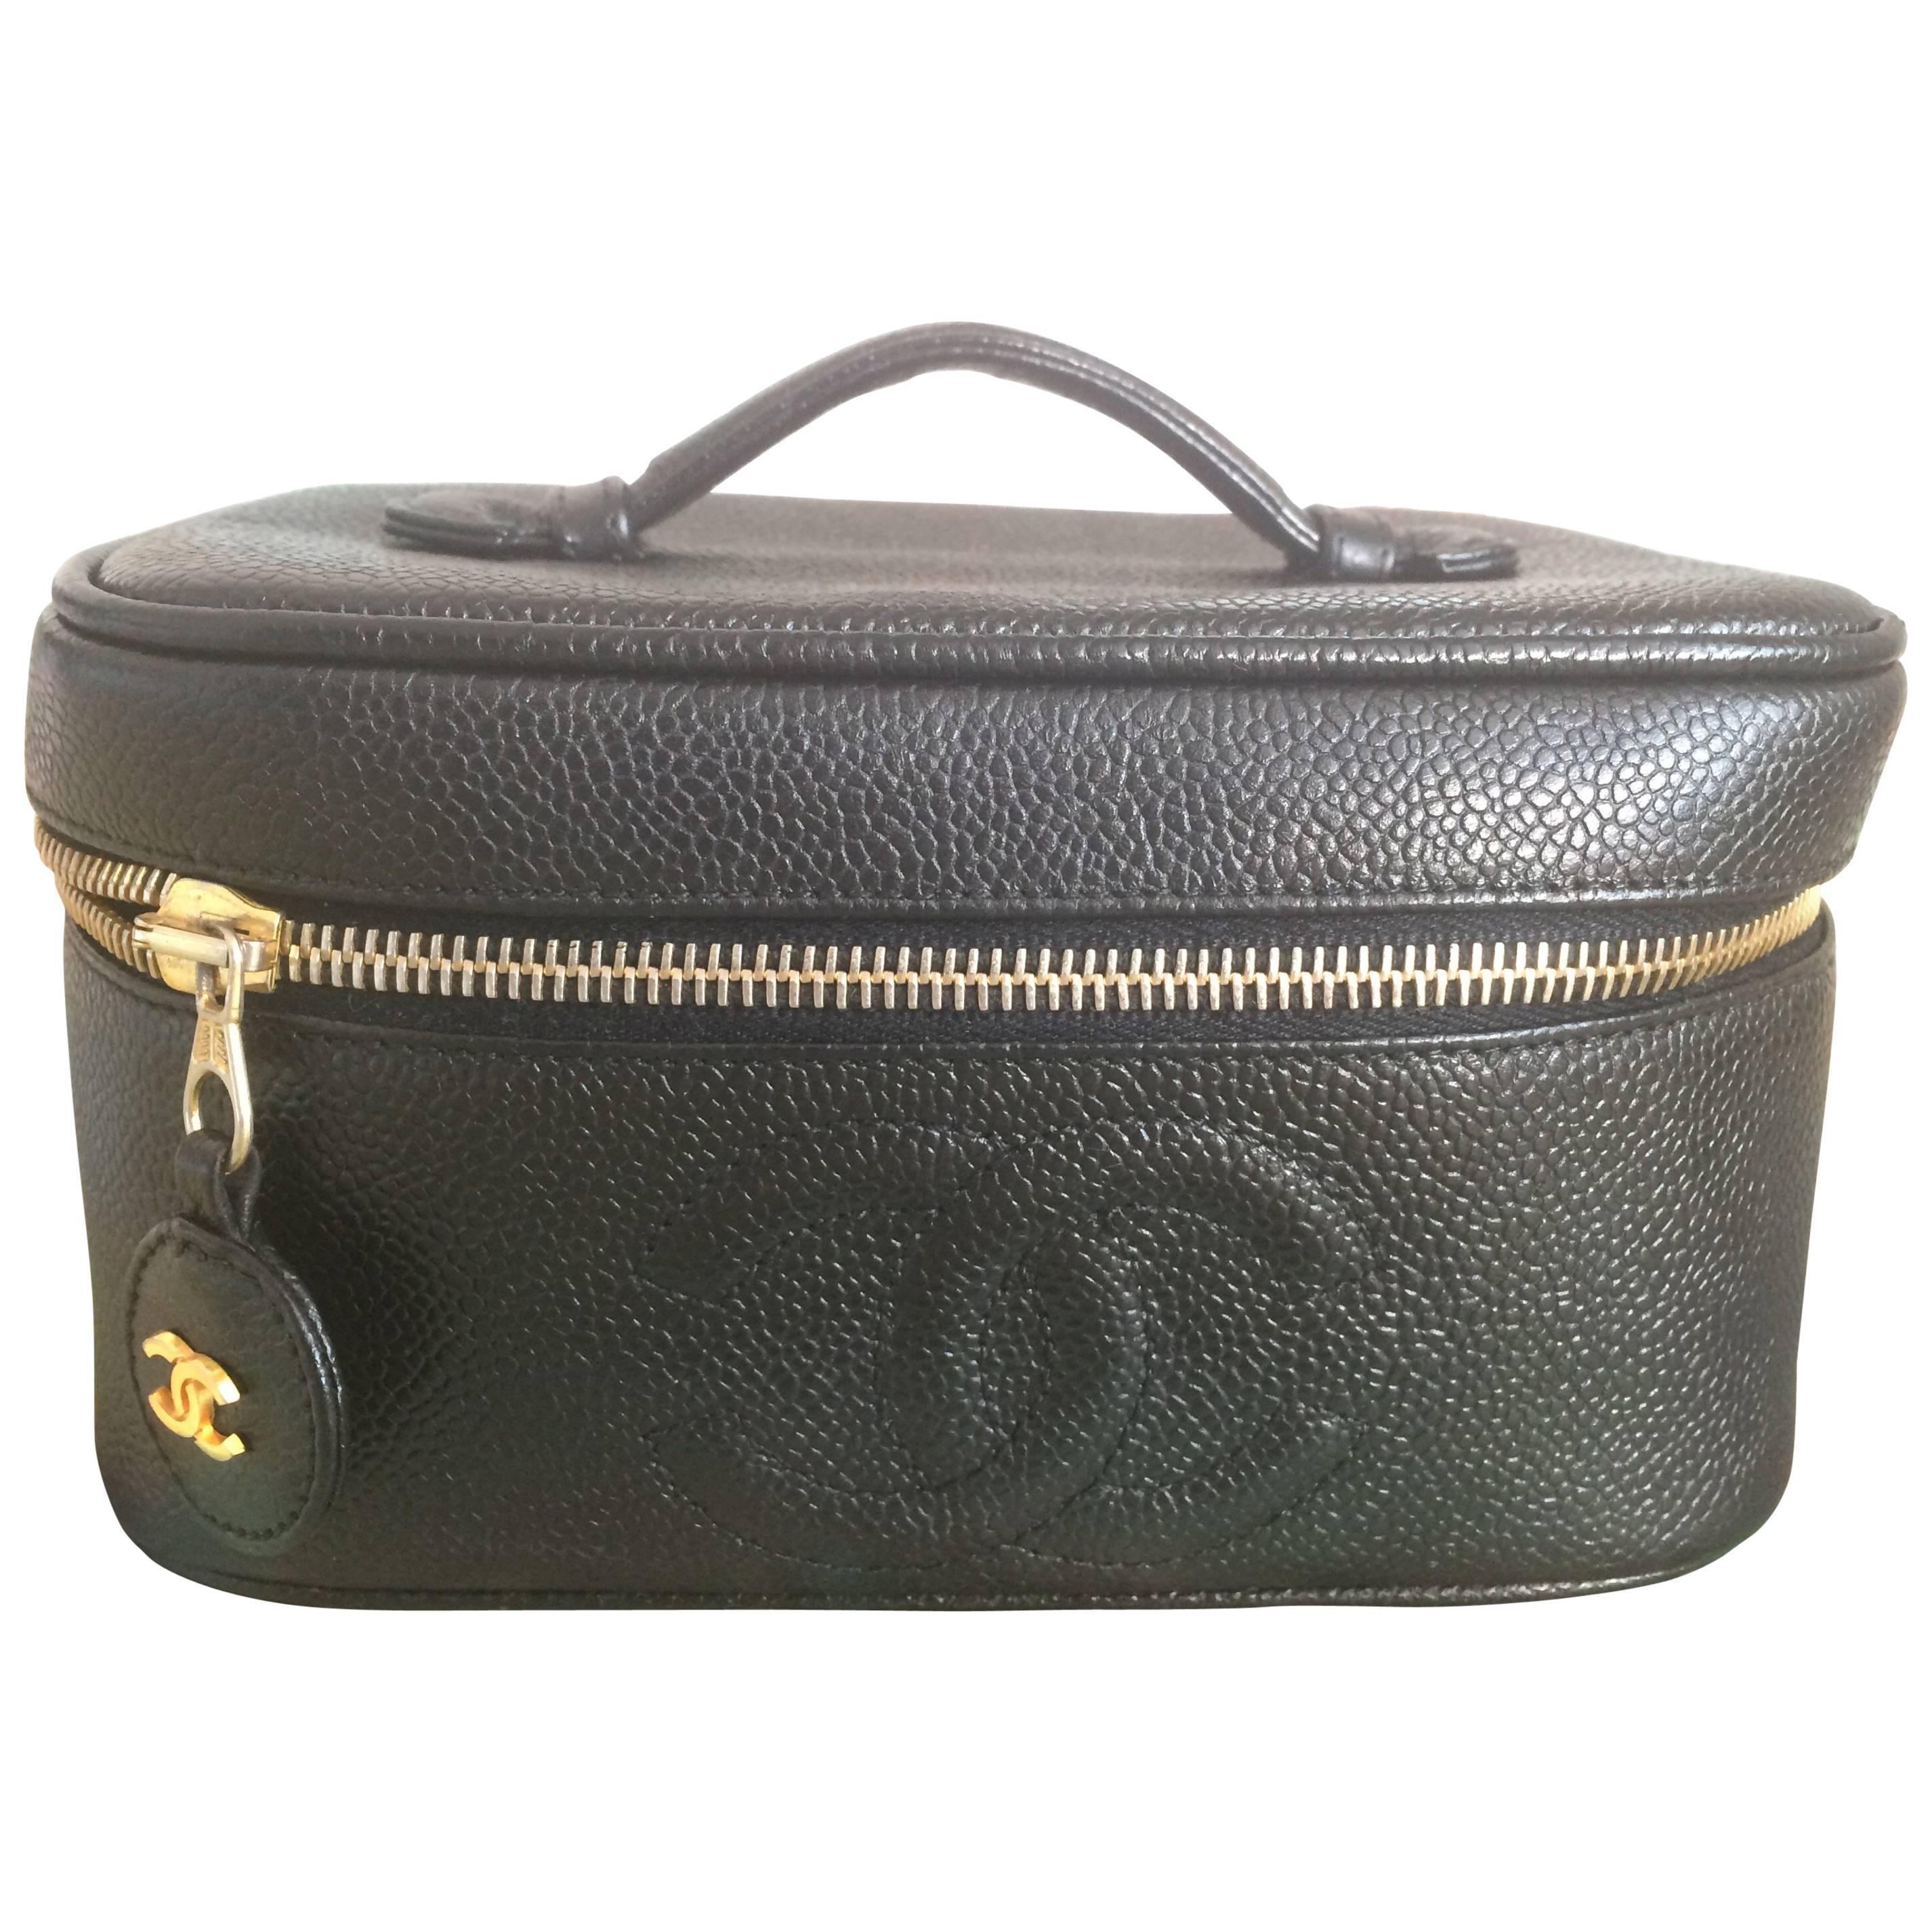 Vintage CHANEL black caviar cosmetic case, vanity bag, mini purse with CC mark.